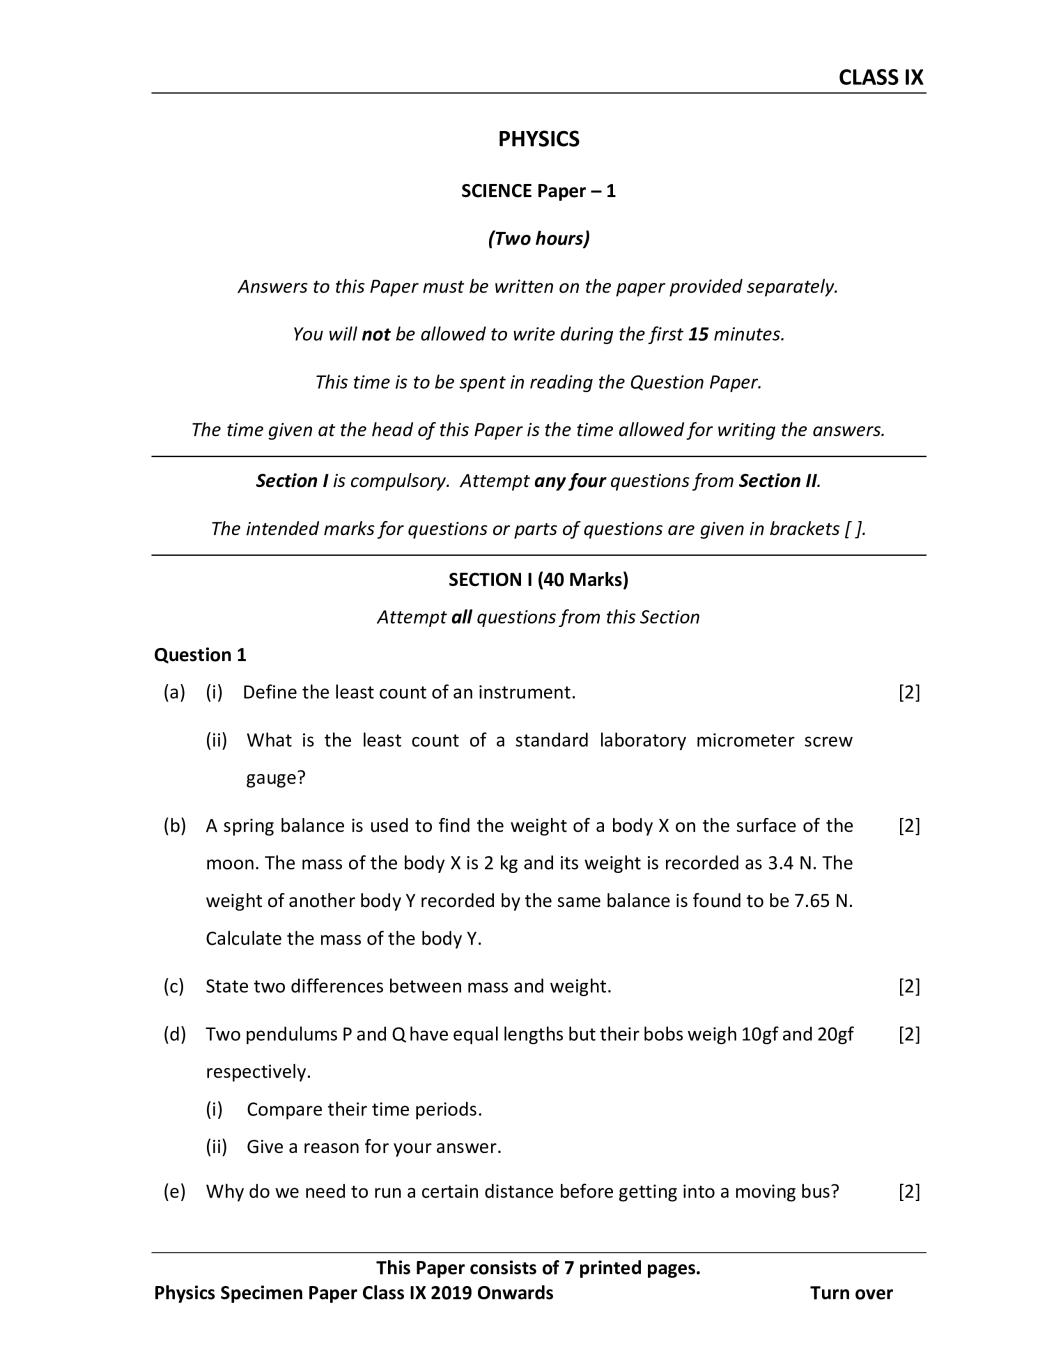 research paper physics pdf